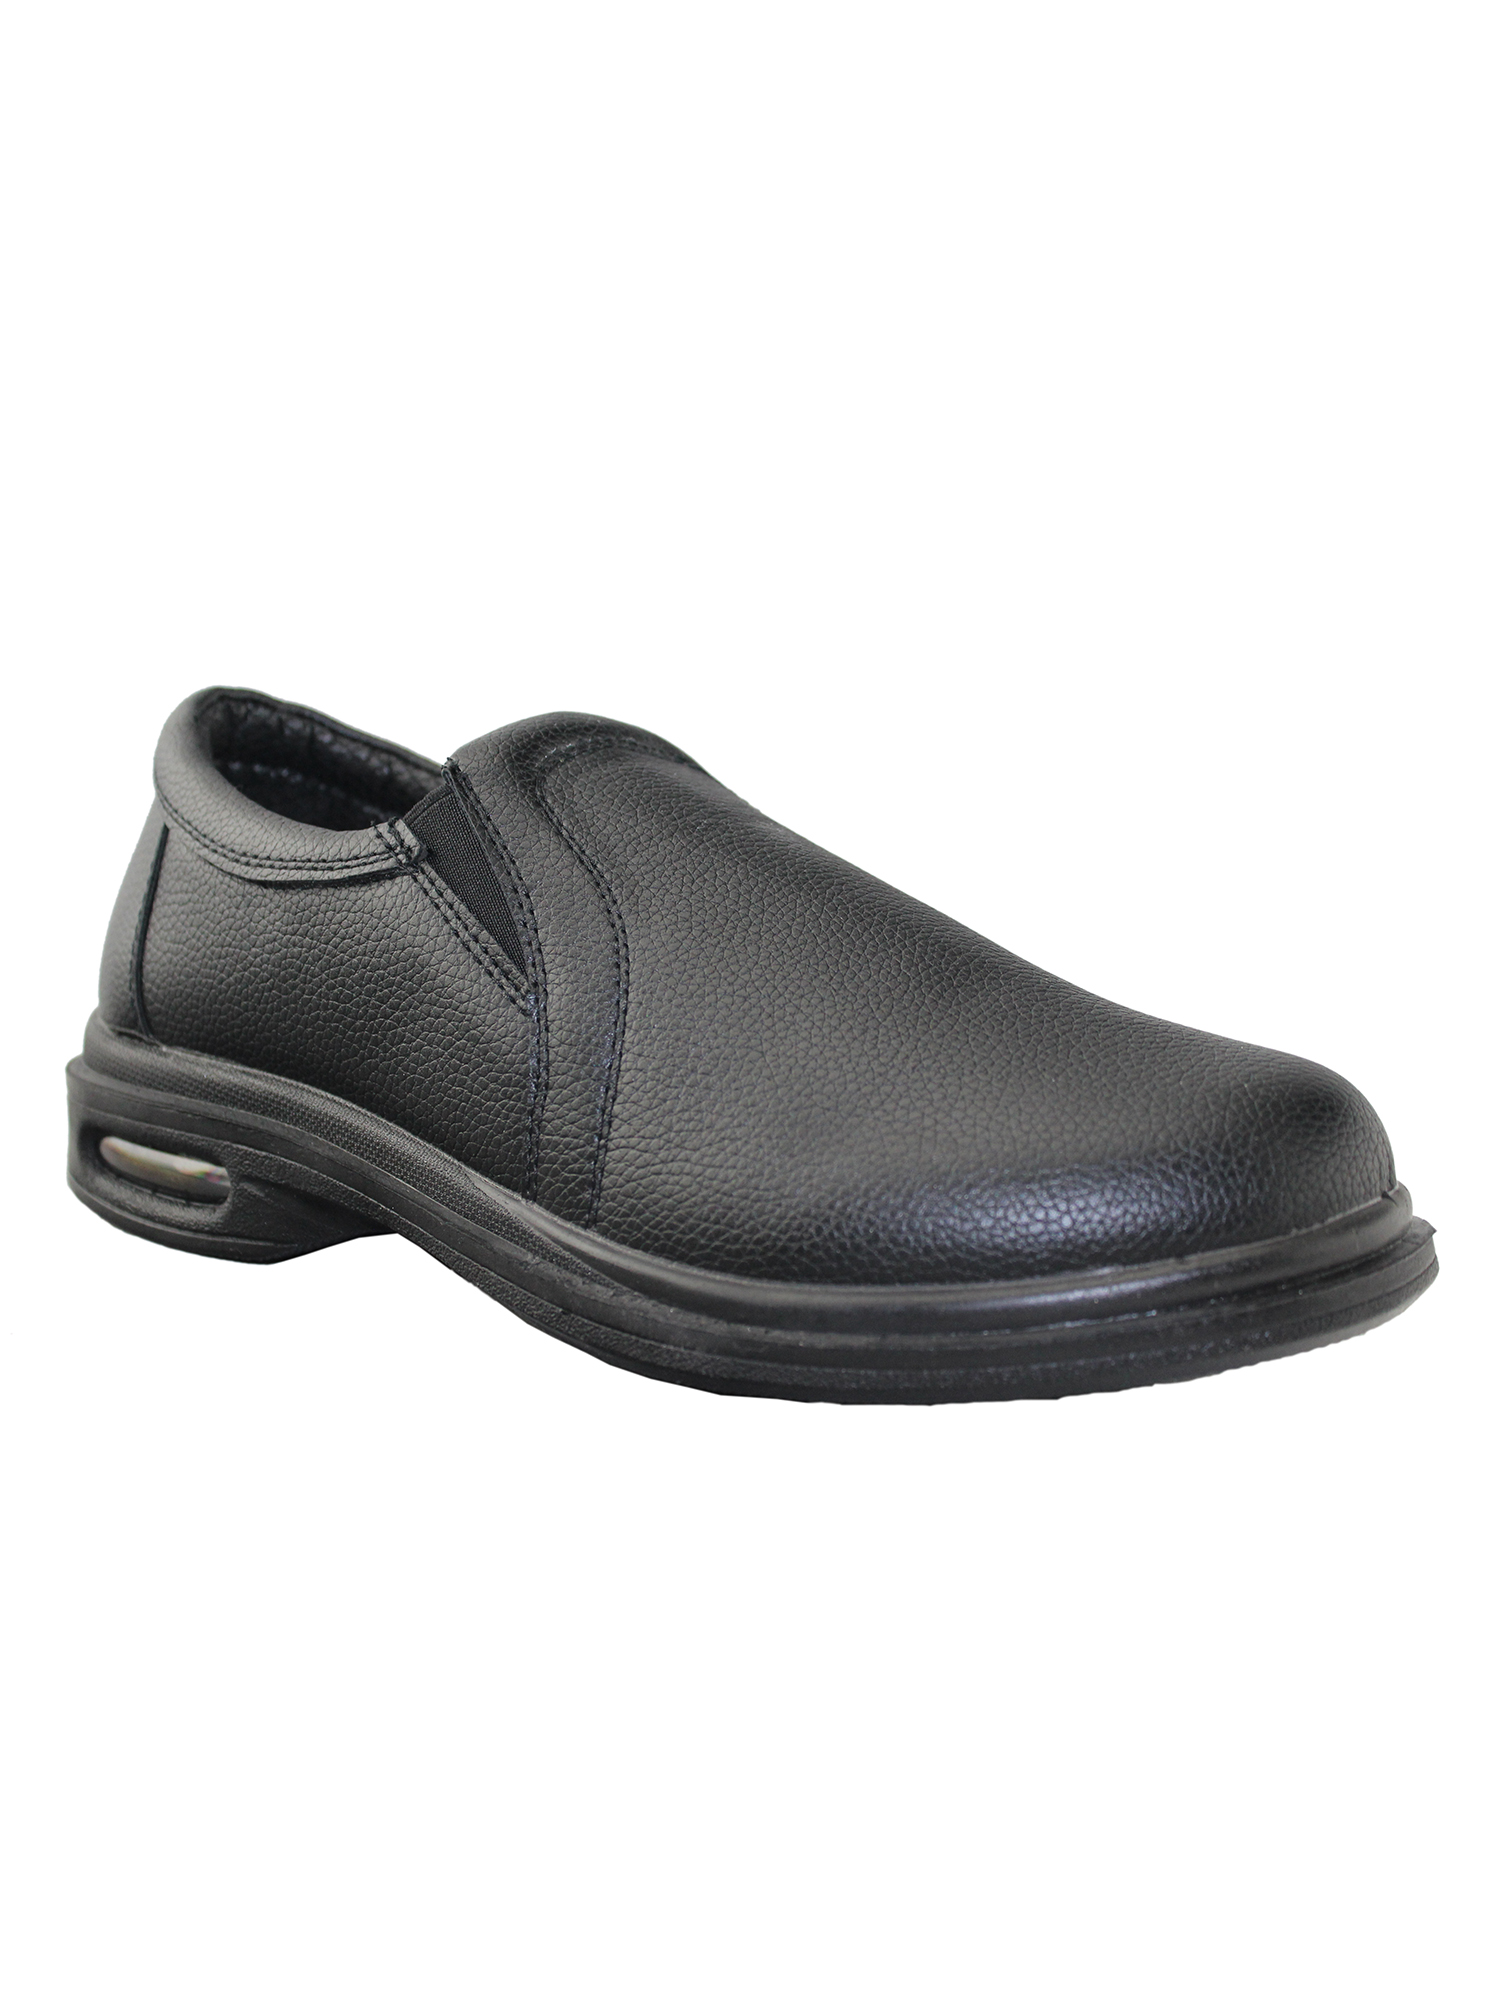 Tanleewa Men's Leather Work Shoes Anti-slip Waterproof Pull-on Casual Dress Shoe Size 10.5 - image 3 of 5